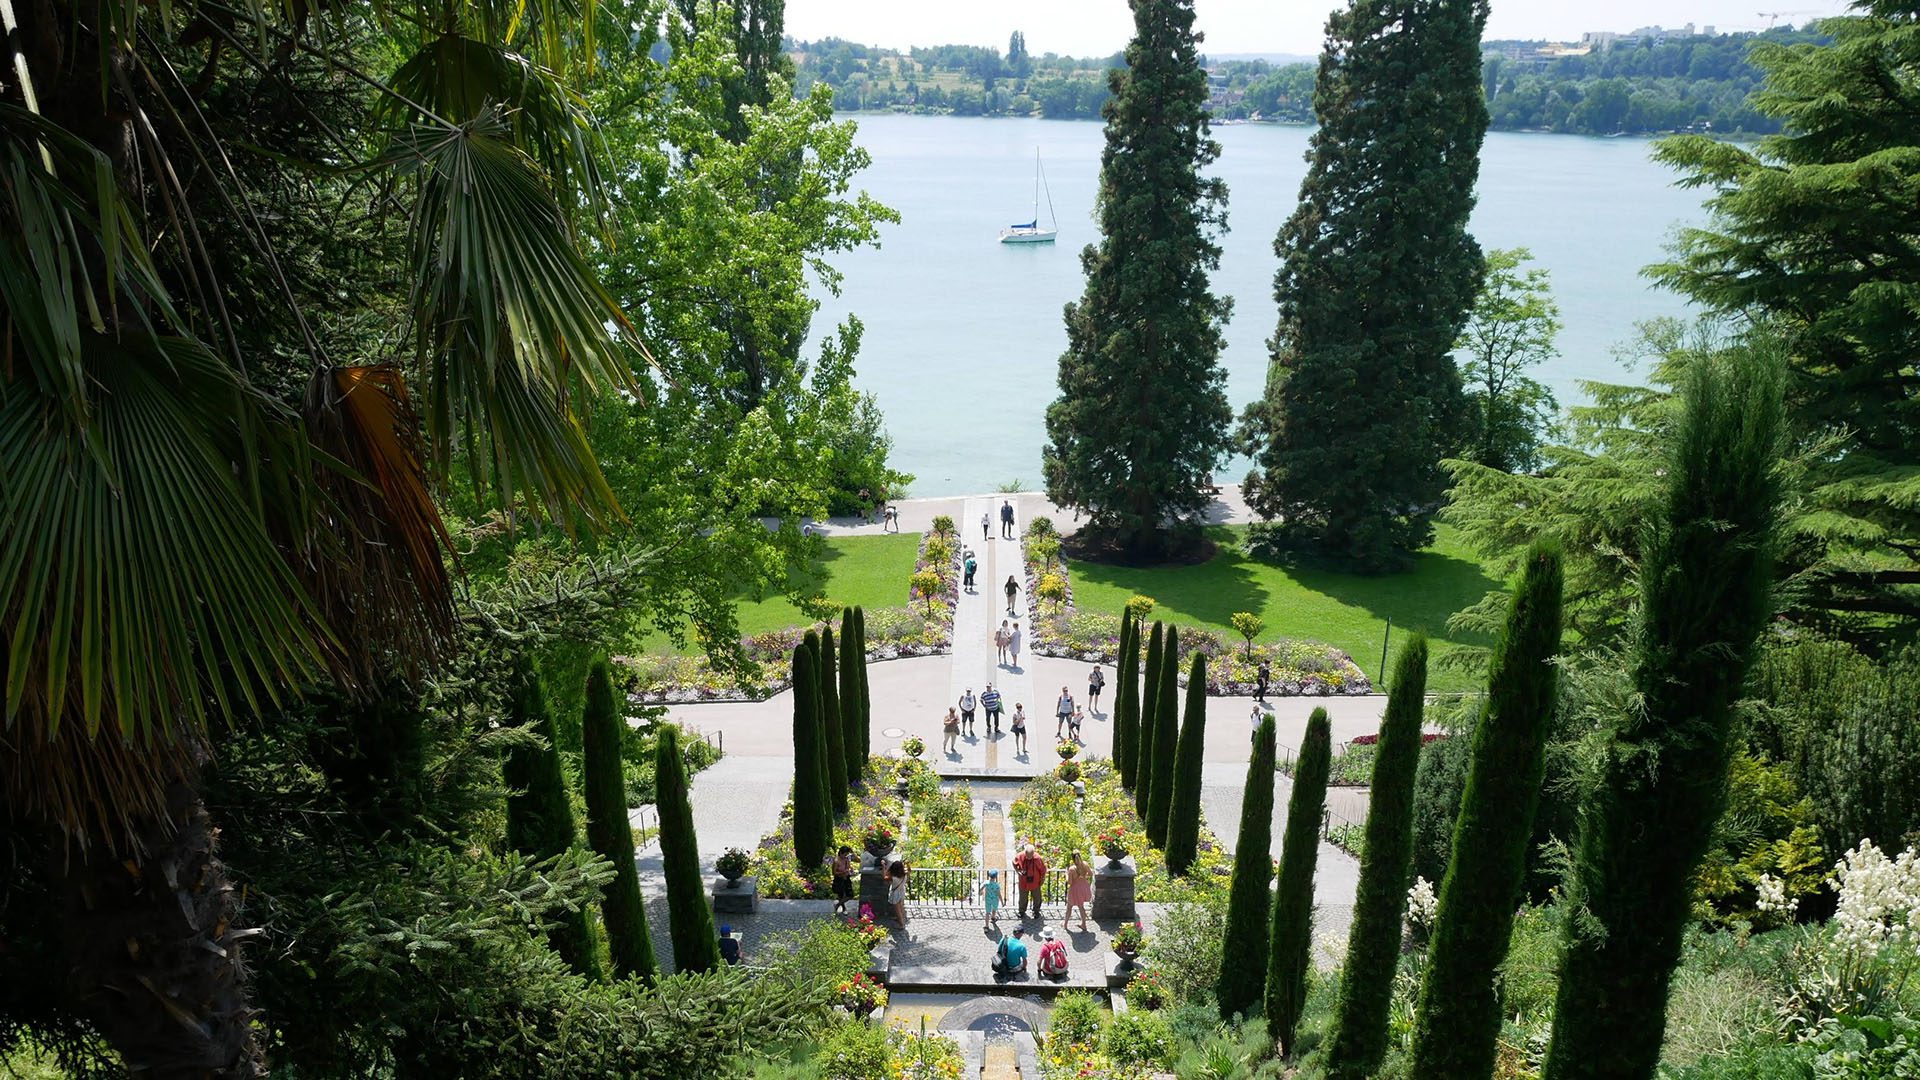 Botanical Garden along the edges of Lake Constance, Photo by Catrina Carrigan on Unsplash